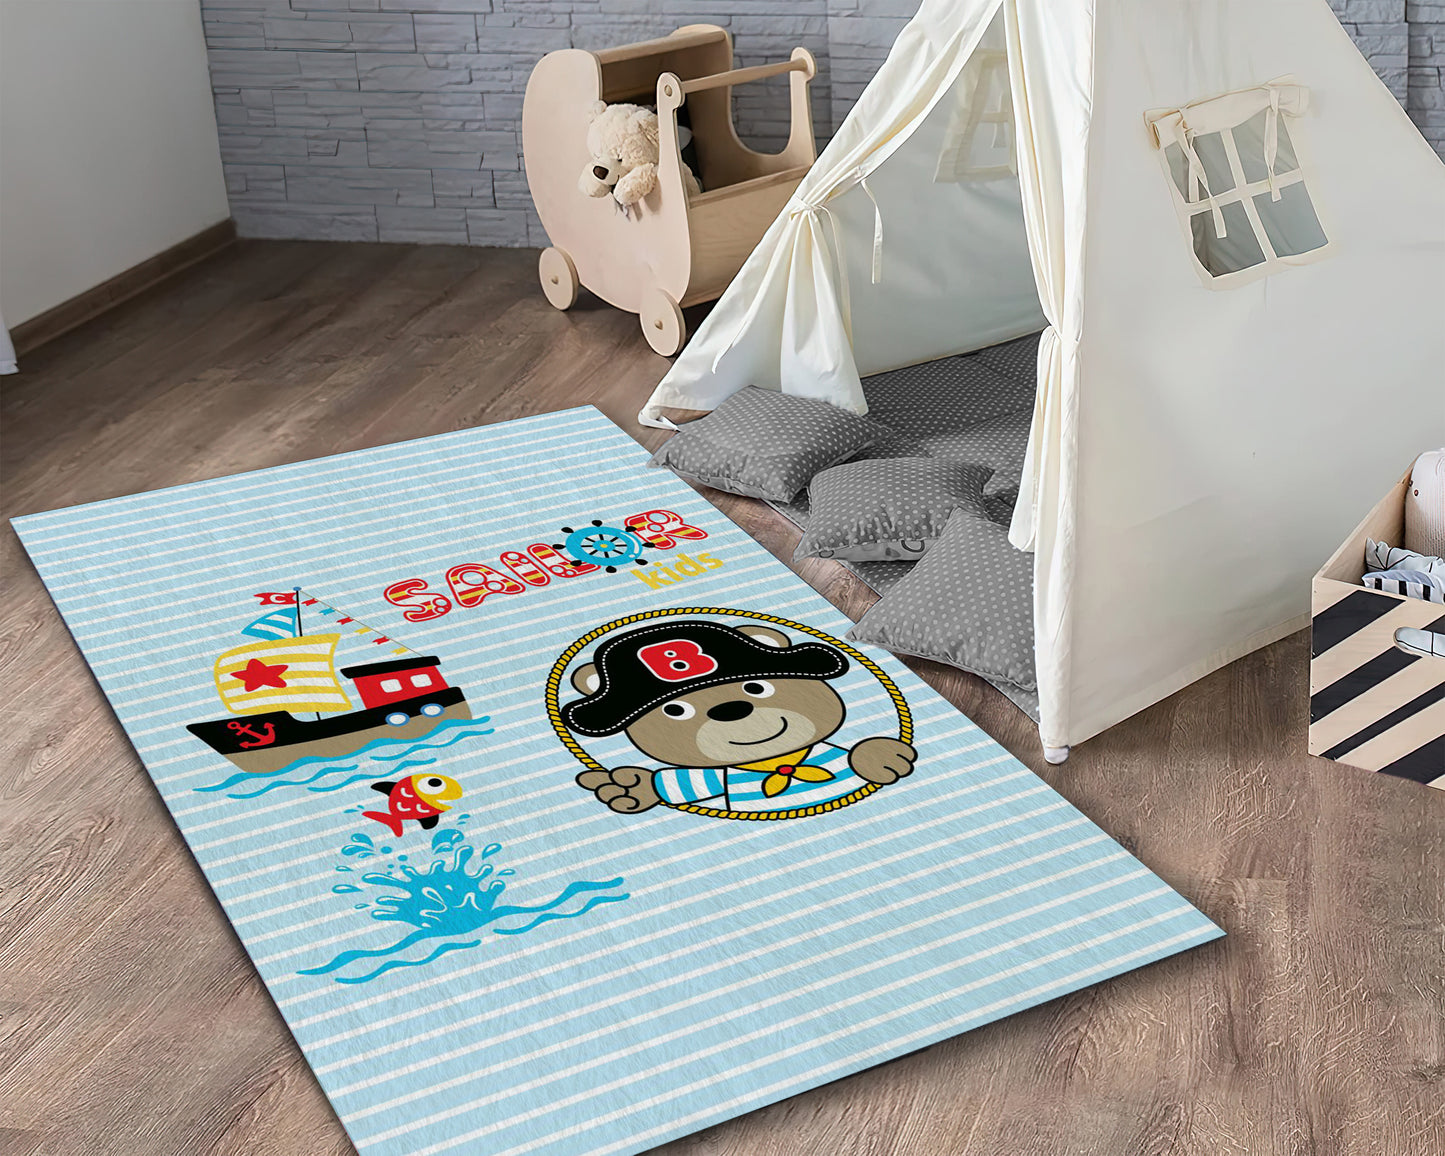 Blue Sailor Rug, Boys Room Carpet, Kids Striped Themed Play Mat, Ship Anchor Decor, Kids Room Rug